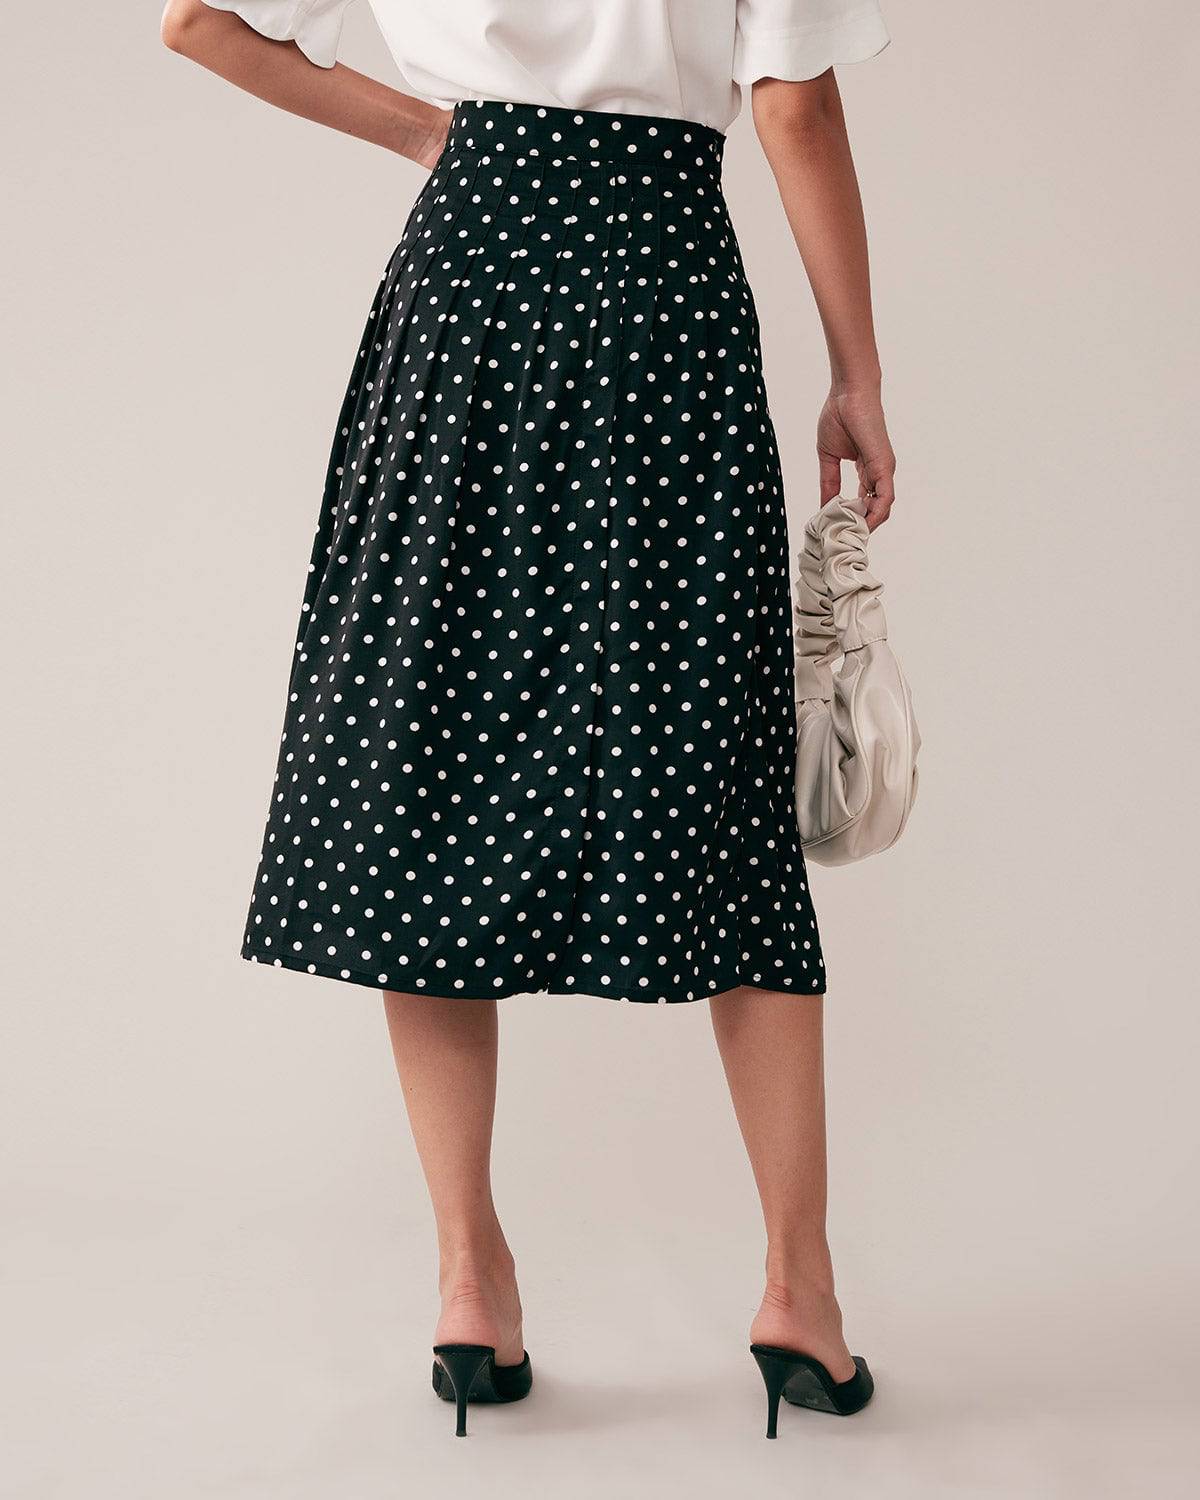 The Polka Dots A-line Skirt